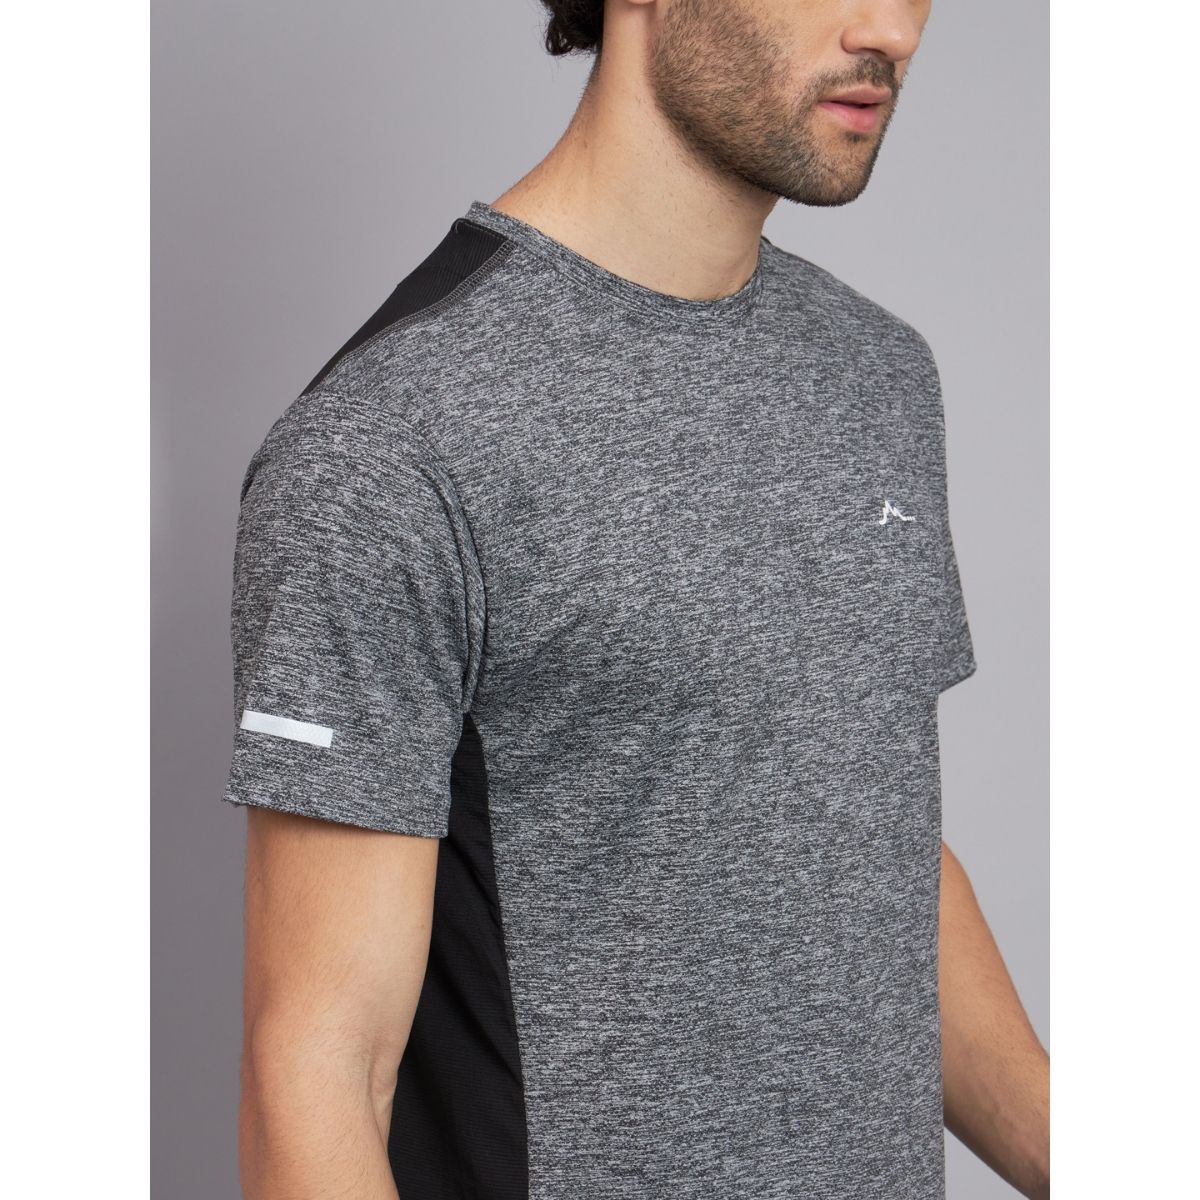 Men's Ultralight Athletic Half Sleeves T-Shirt - Summit Grey 6